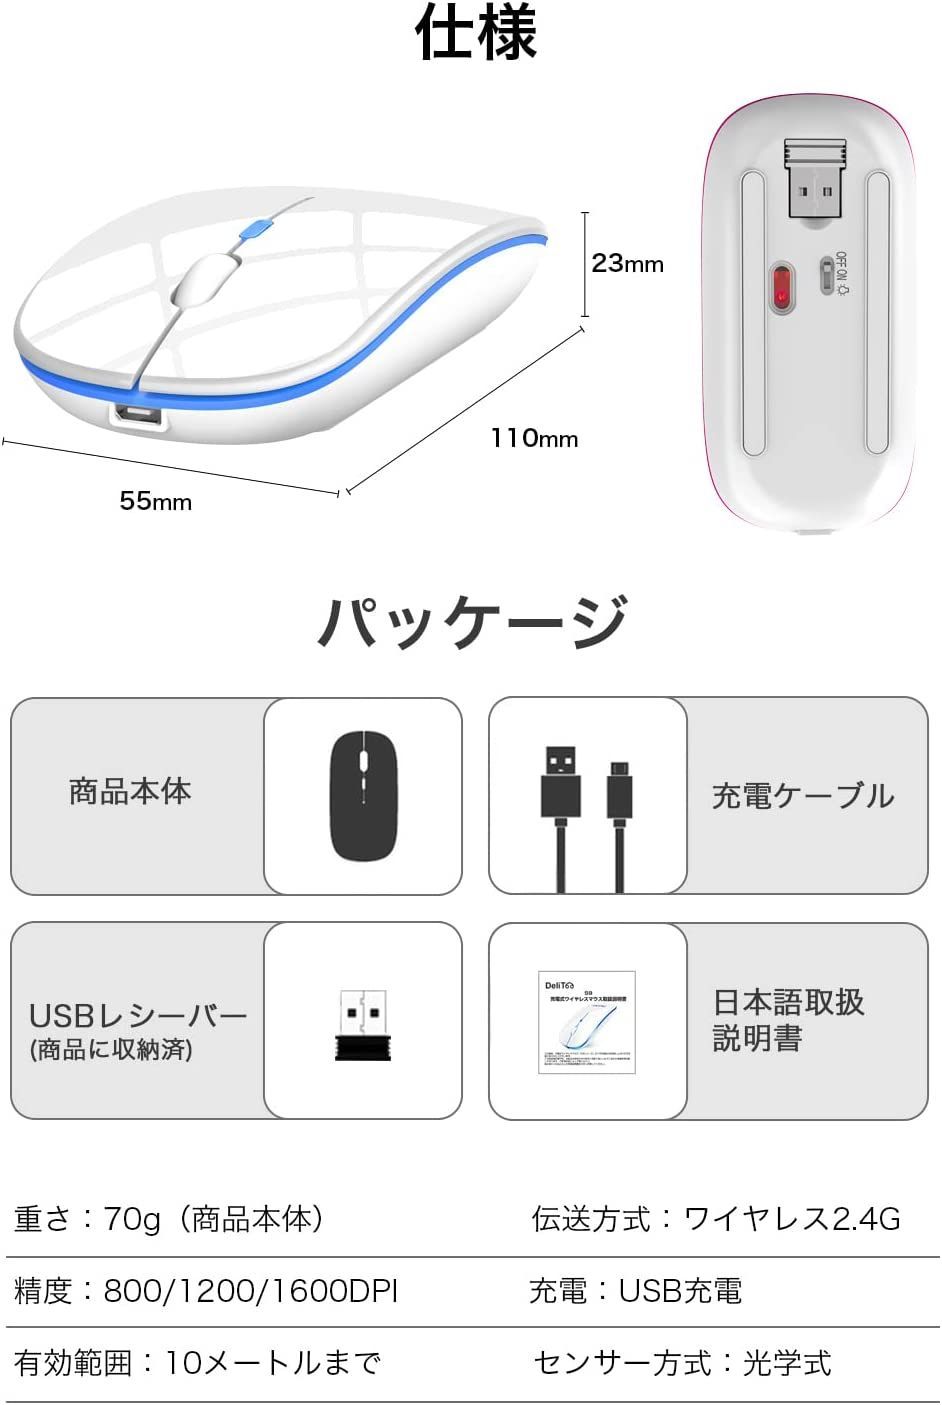 DeliToo ワイヤレスマウス 7色ライト付き 静音 充電式 無線 2.4GHz 1600DPI 3段調節可能 S9 (白)